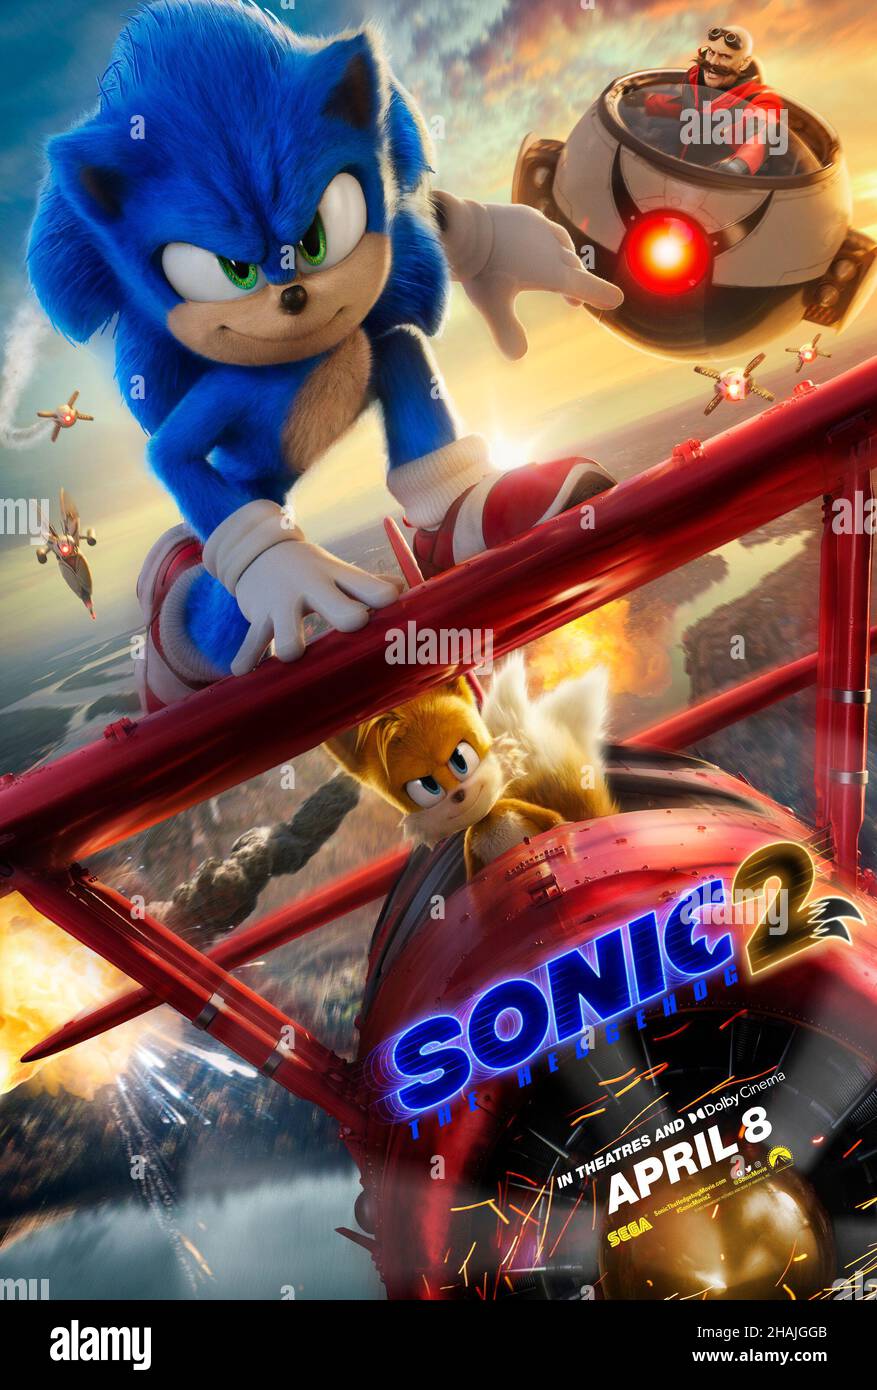 VERÖFFENTLICHUNGSDATUM: 8. April 2022. TITEL: Sonic the Hedgehog 2. STUDIO: Paramount Pictures. REGIE: Jeff Fowler. HANDLUNG: Fortsetzung des 2020 live-Action-Spielfilms „Sonic the Hedgehog“. HAUPTROLLE: Poster Art. (Kreditbild: © Paramount Pictures/Entertainment Picturs) Stockfoto